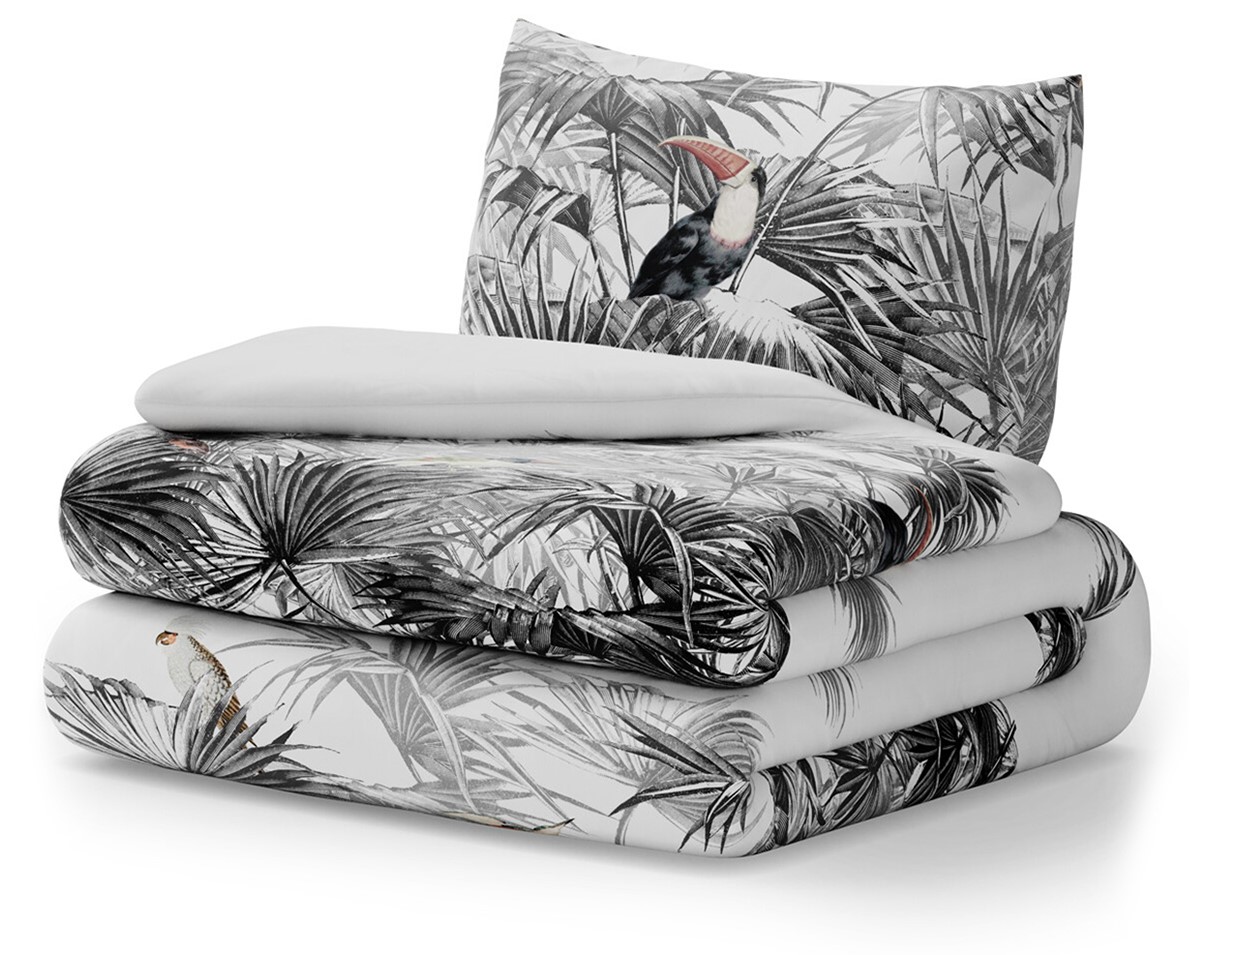 Set lenzuola AVERI colore grigio stampato motivi animale stile tropicale  160x200+70x80*2 AmeliaHome